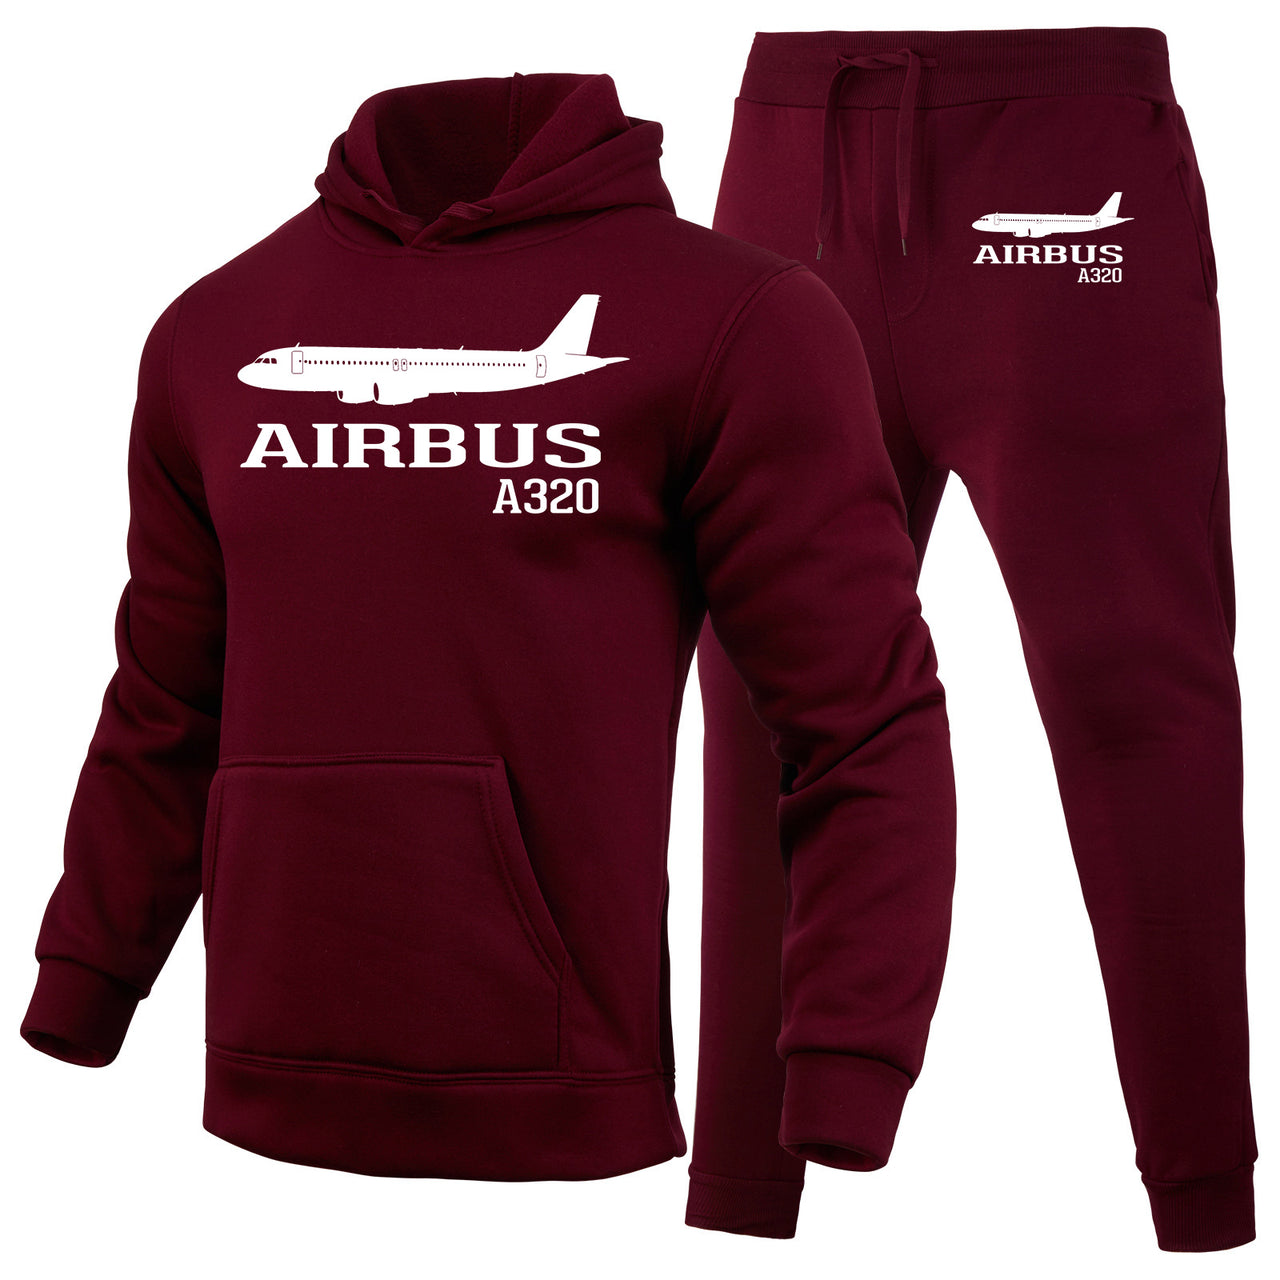 Airbus A320 Printed Designed Hoodies & Sweatpants Set